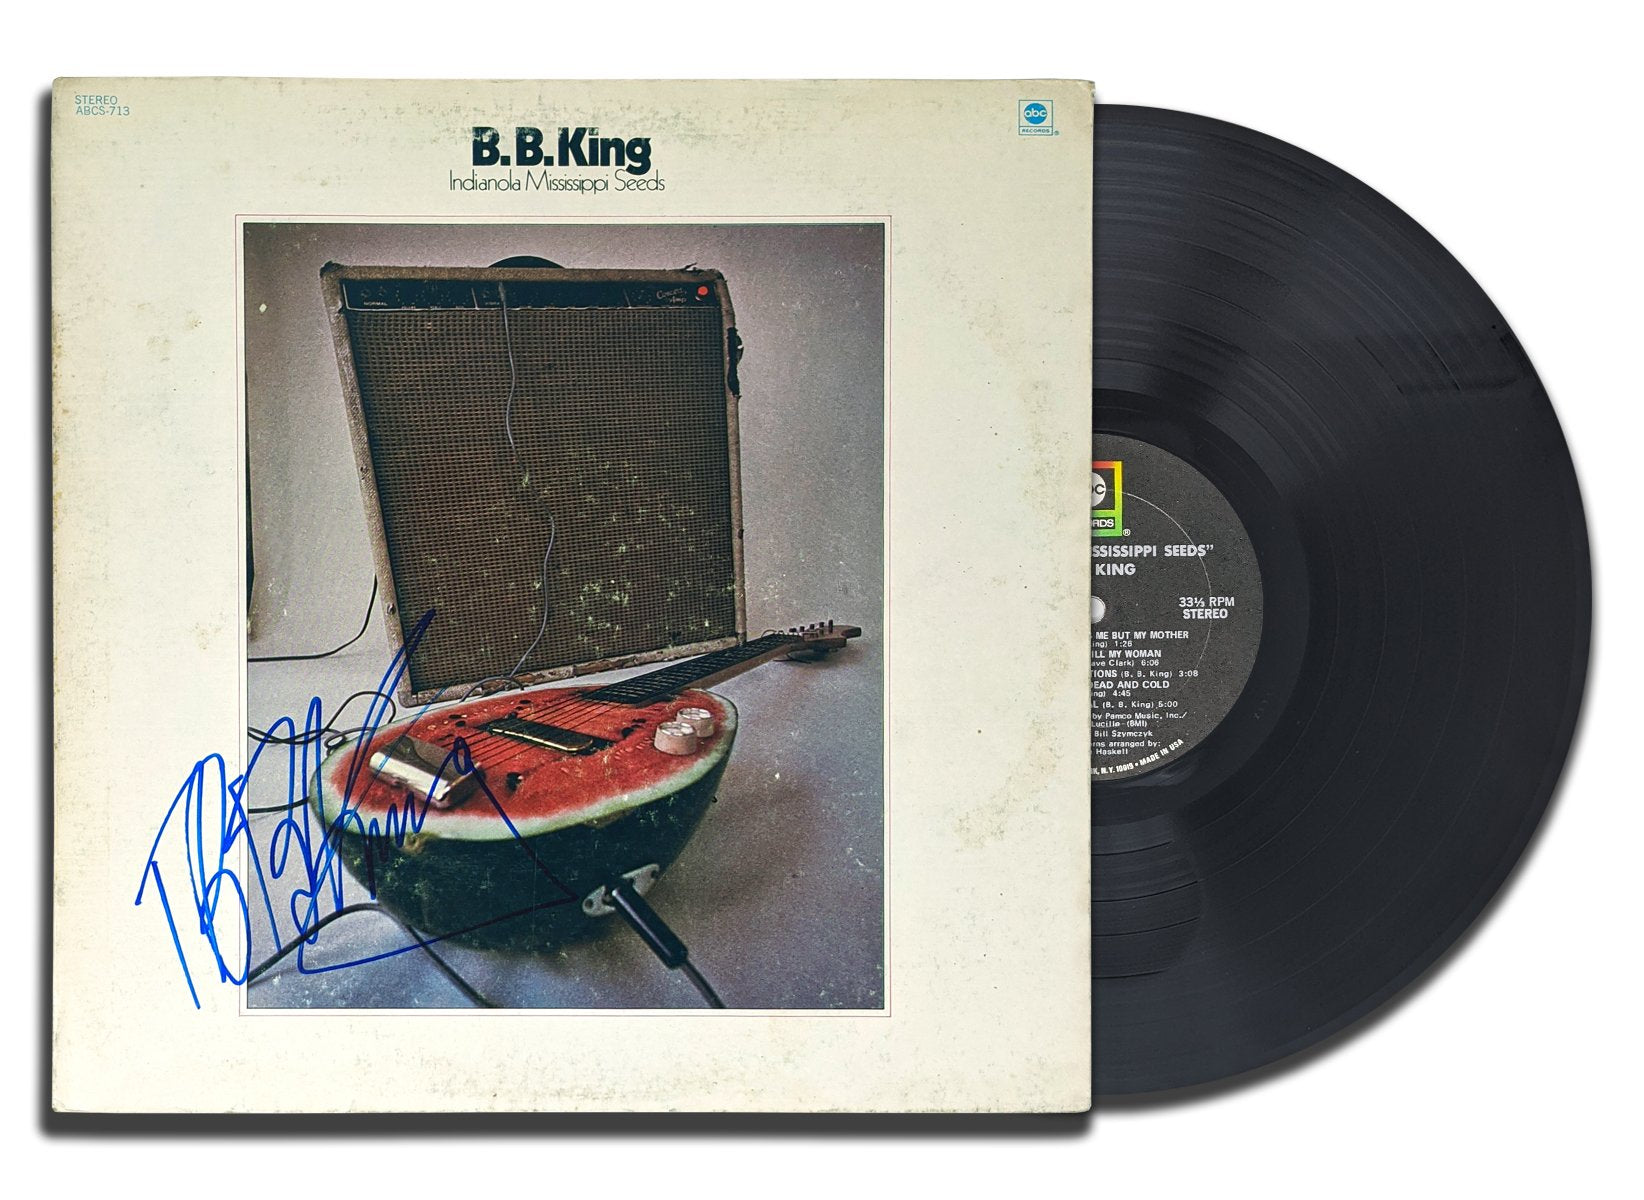 B.B. King Signed INDIANOLA MISSISSIPPI SEEDS Autographed Vinyl Album LP